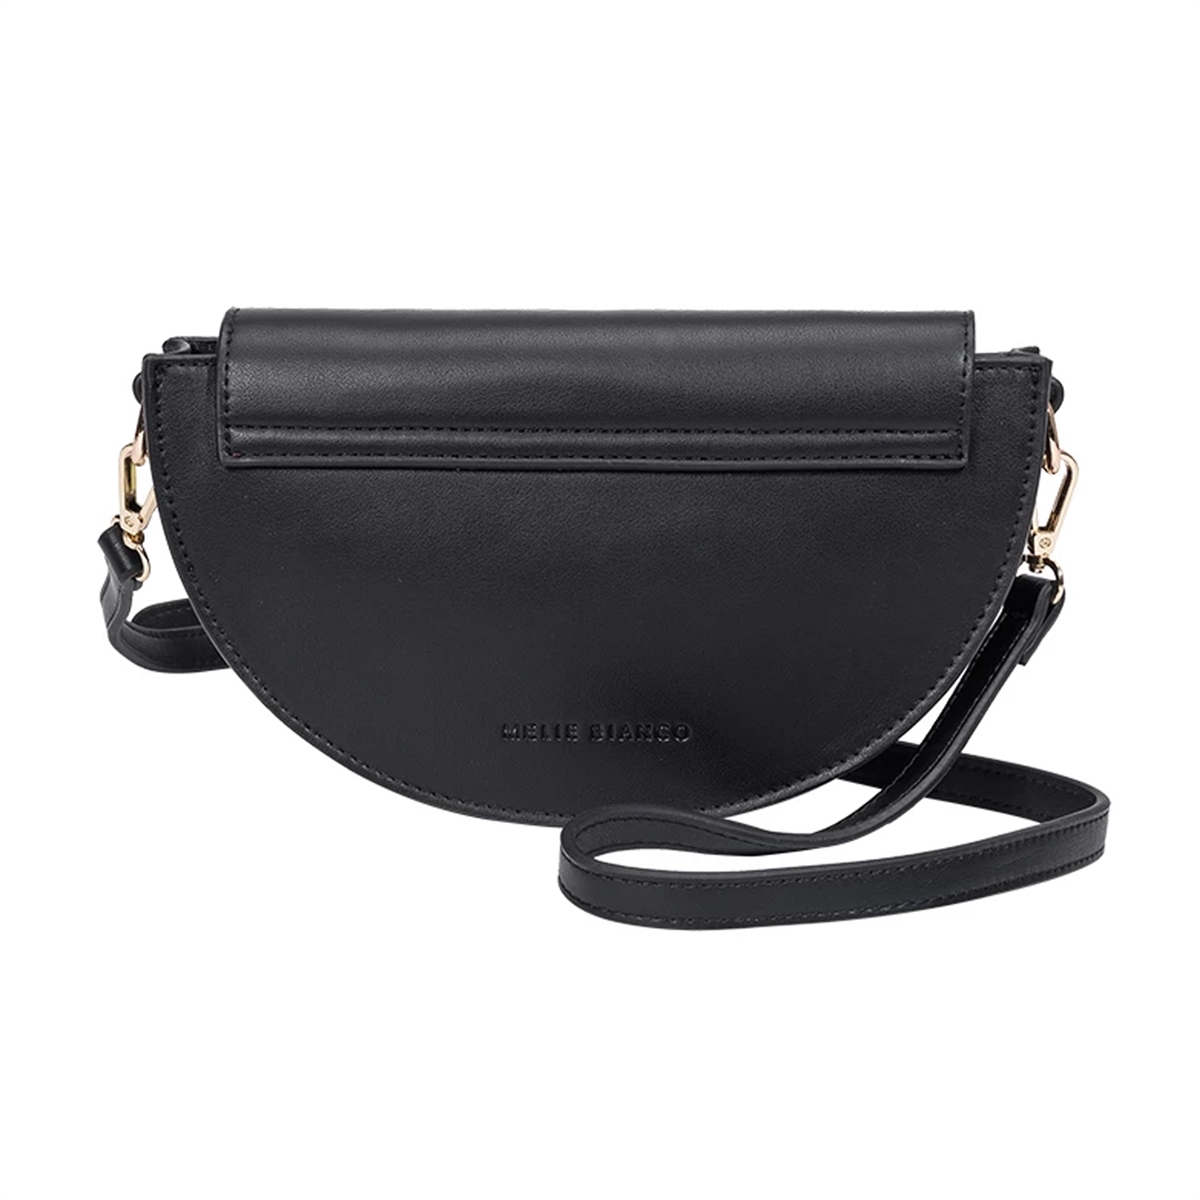 Meli Melo Gold-Toned Leather Crossbody Bag - Black Crossbody Bags, Handbags  - WMI20683